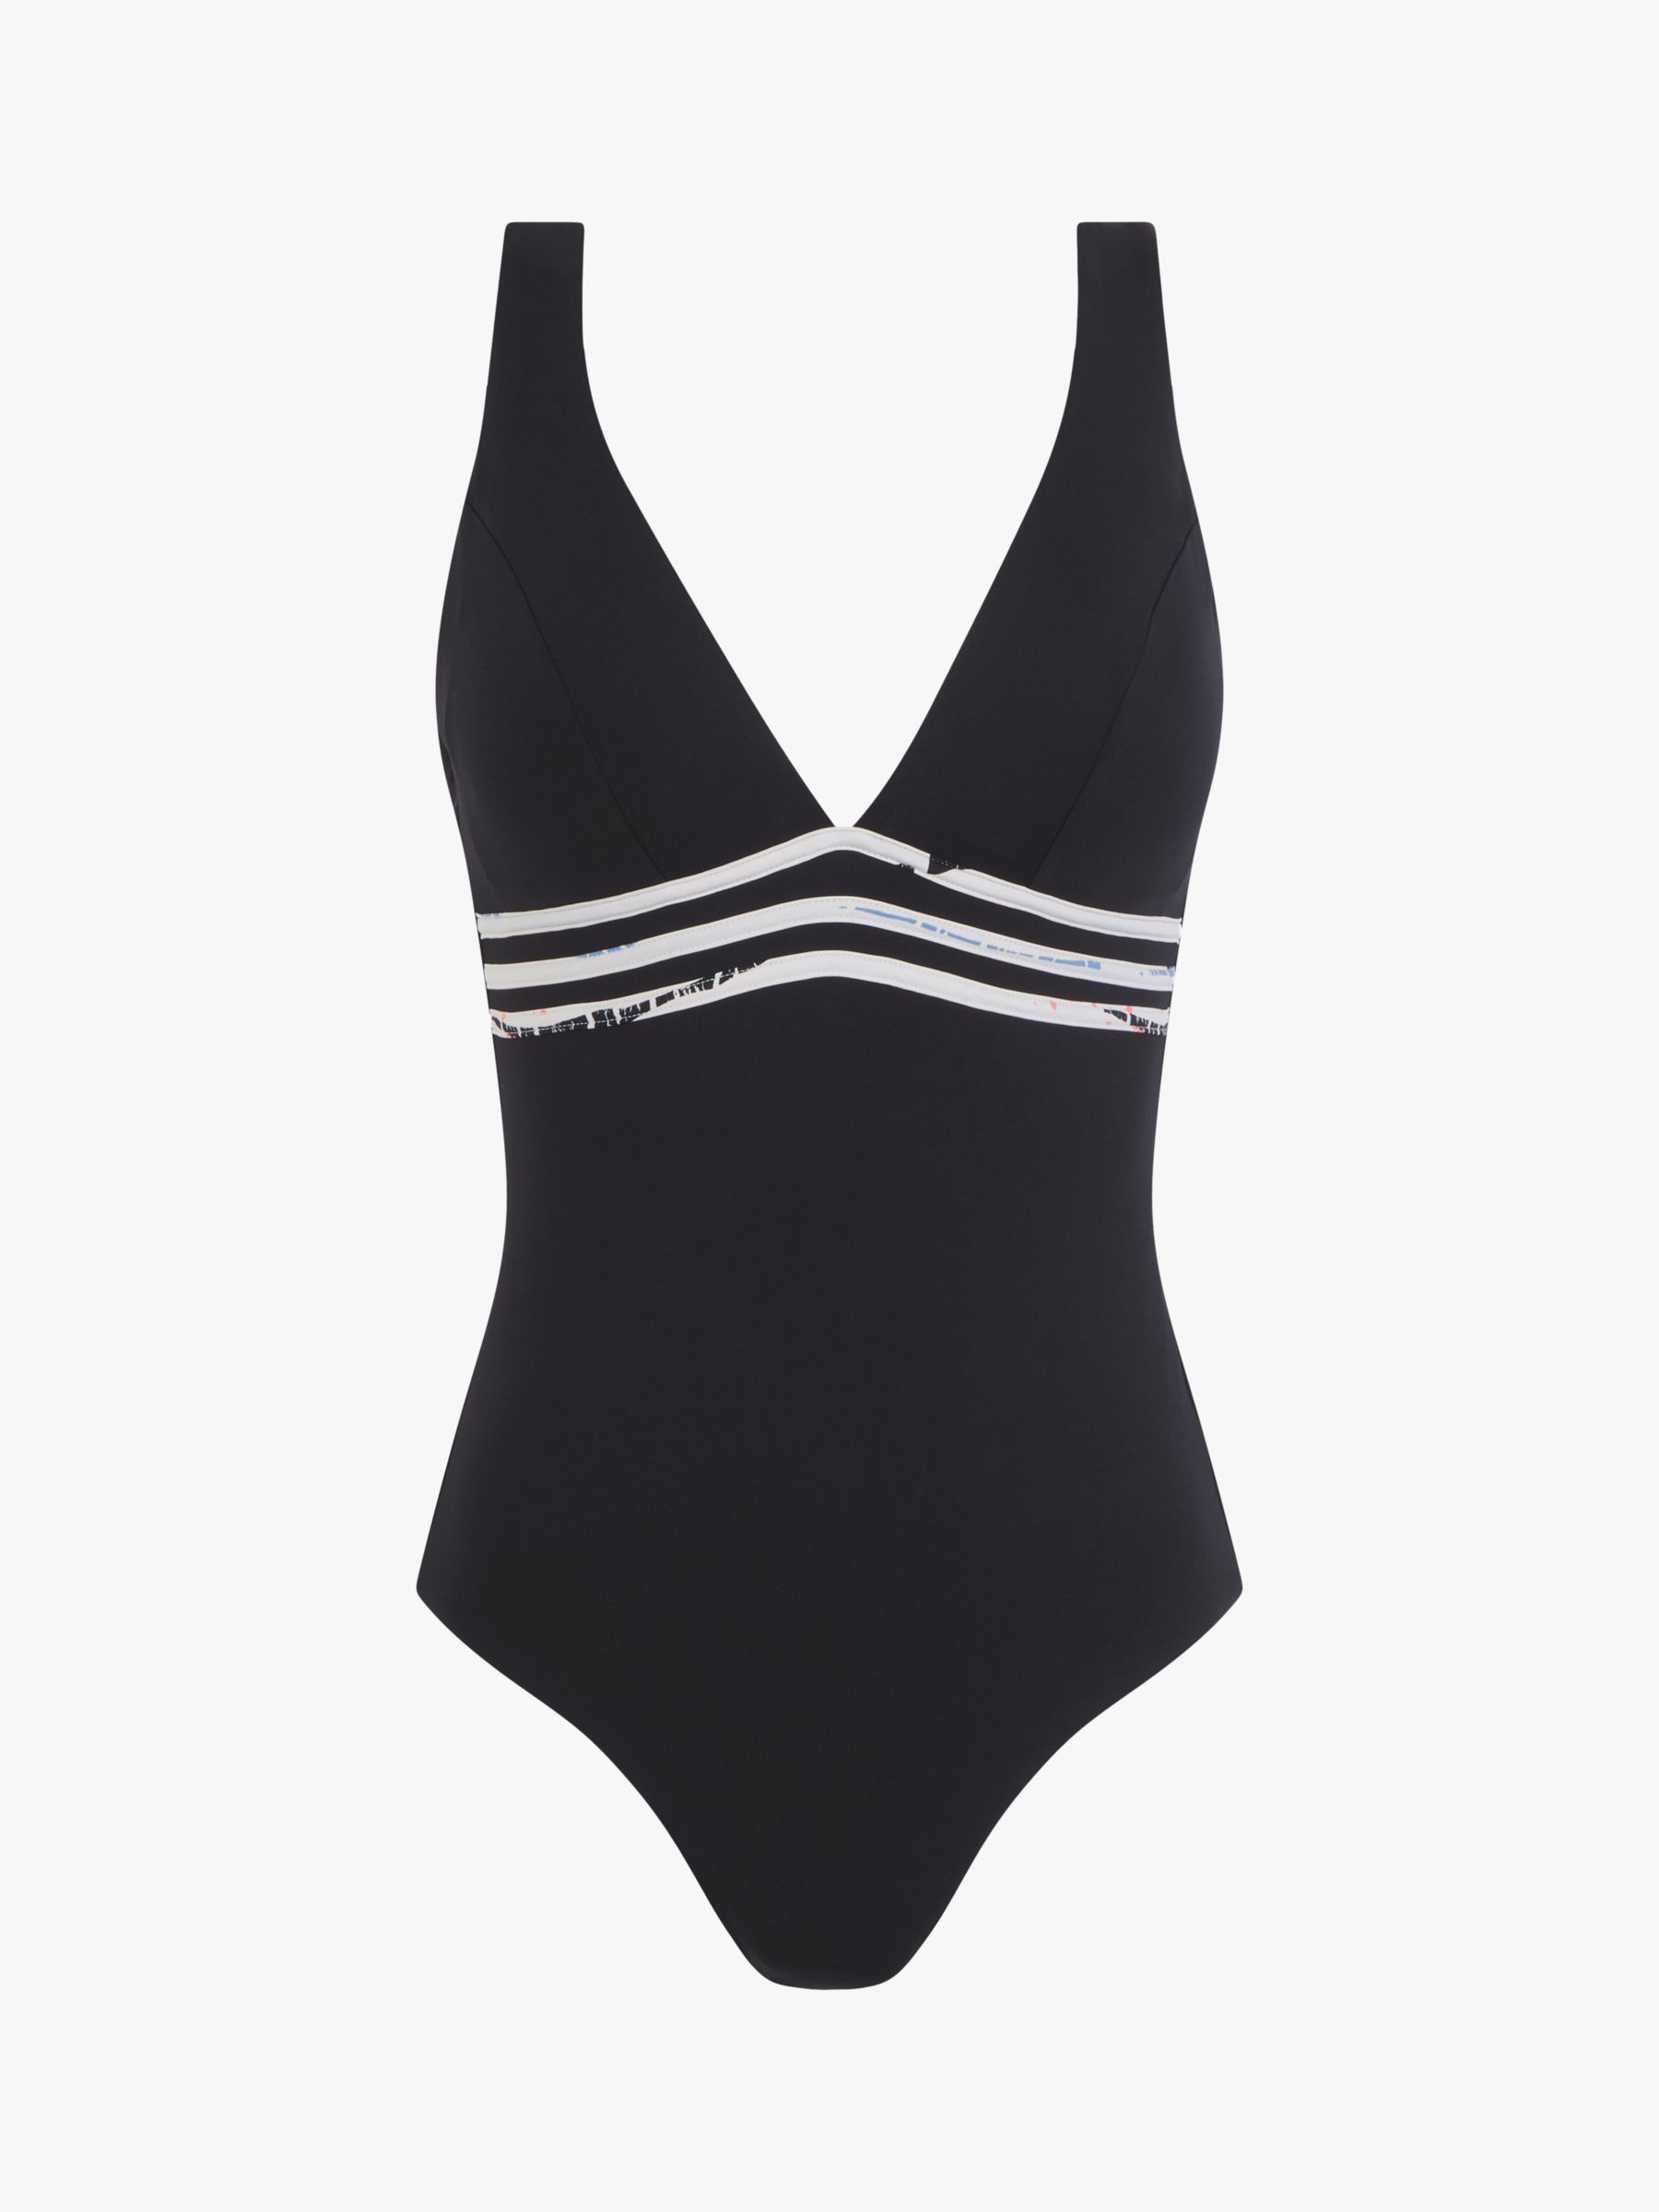 Femilet Maui Plunge Swimsuit, Black/White, S